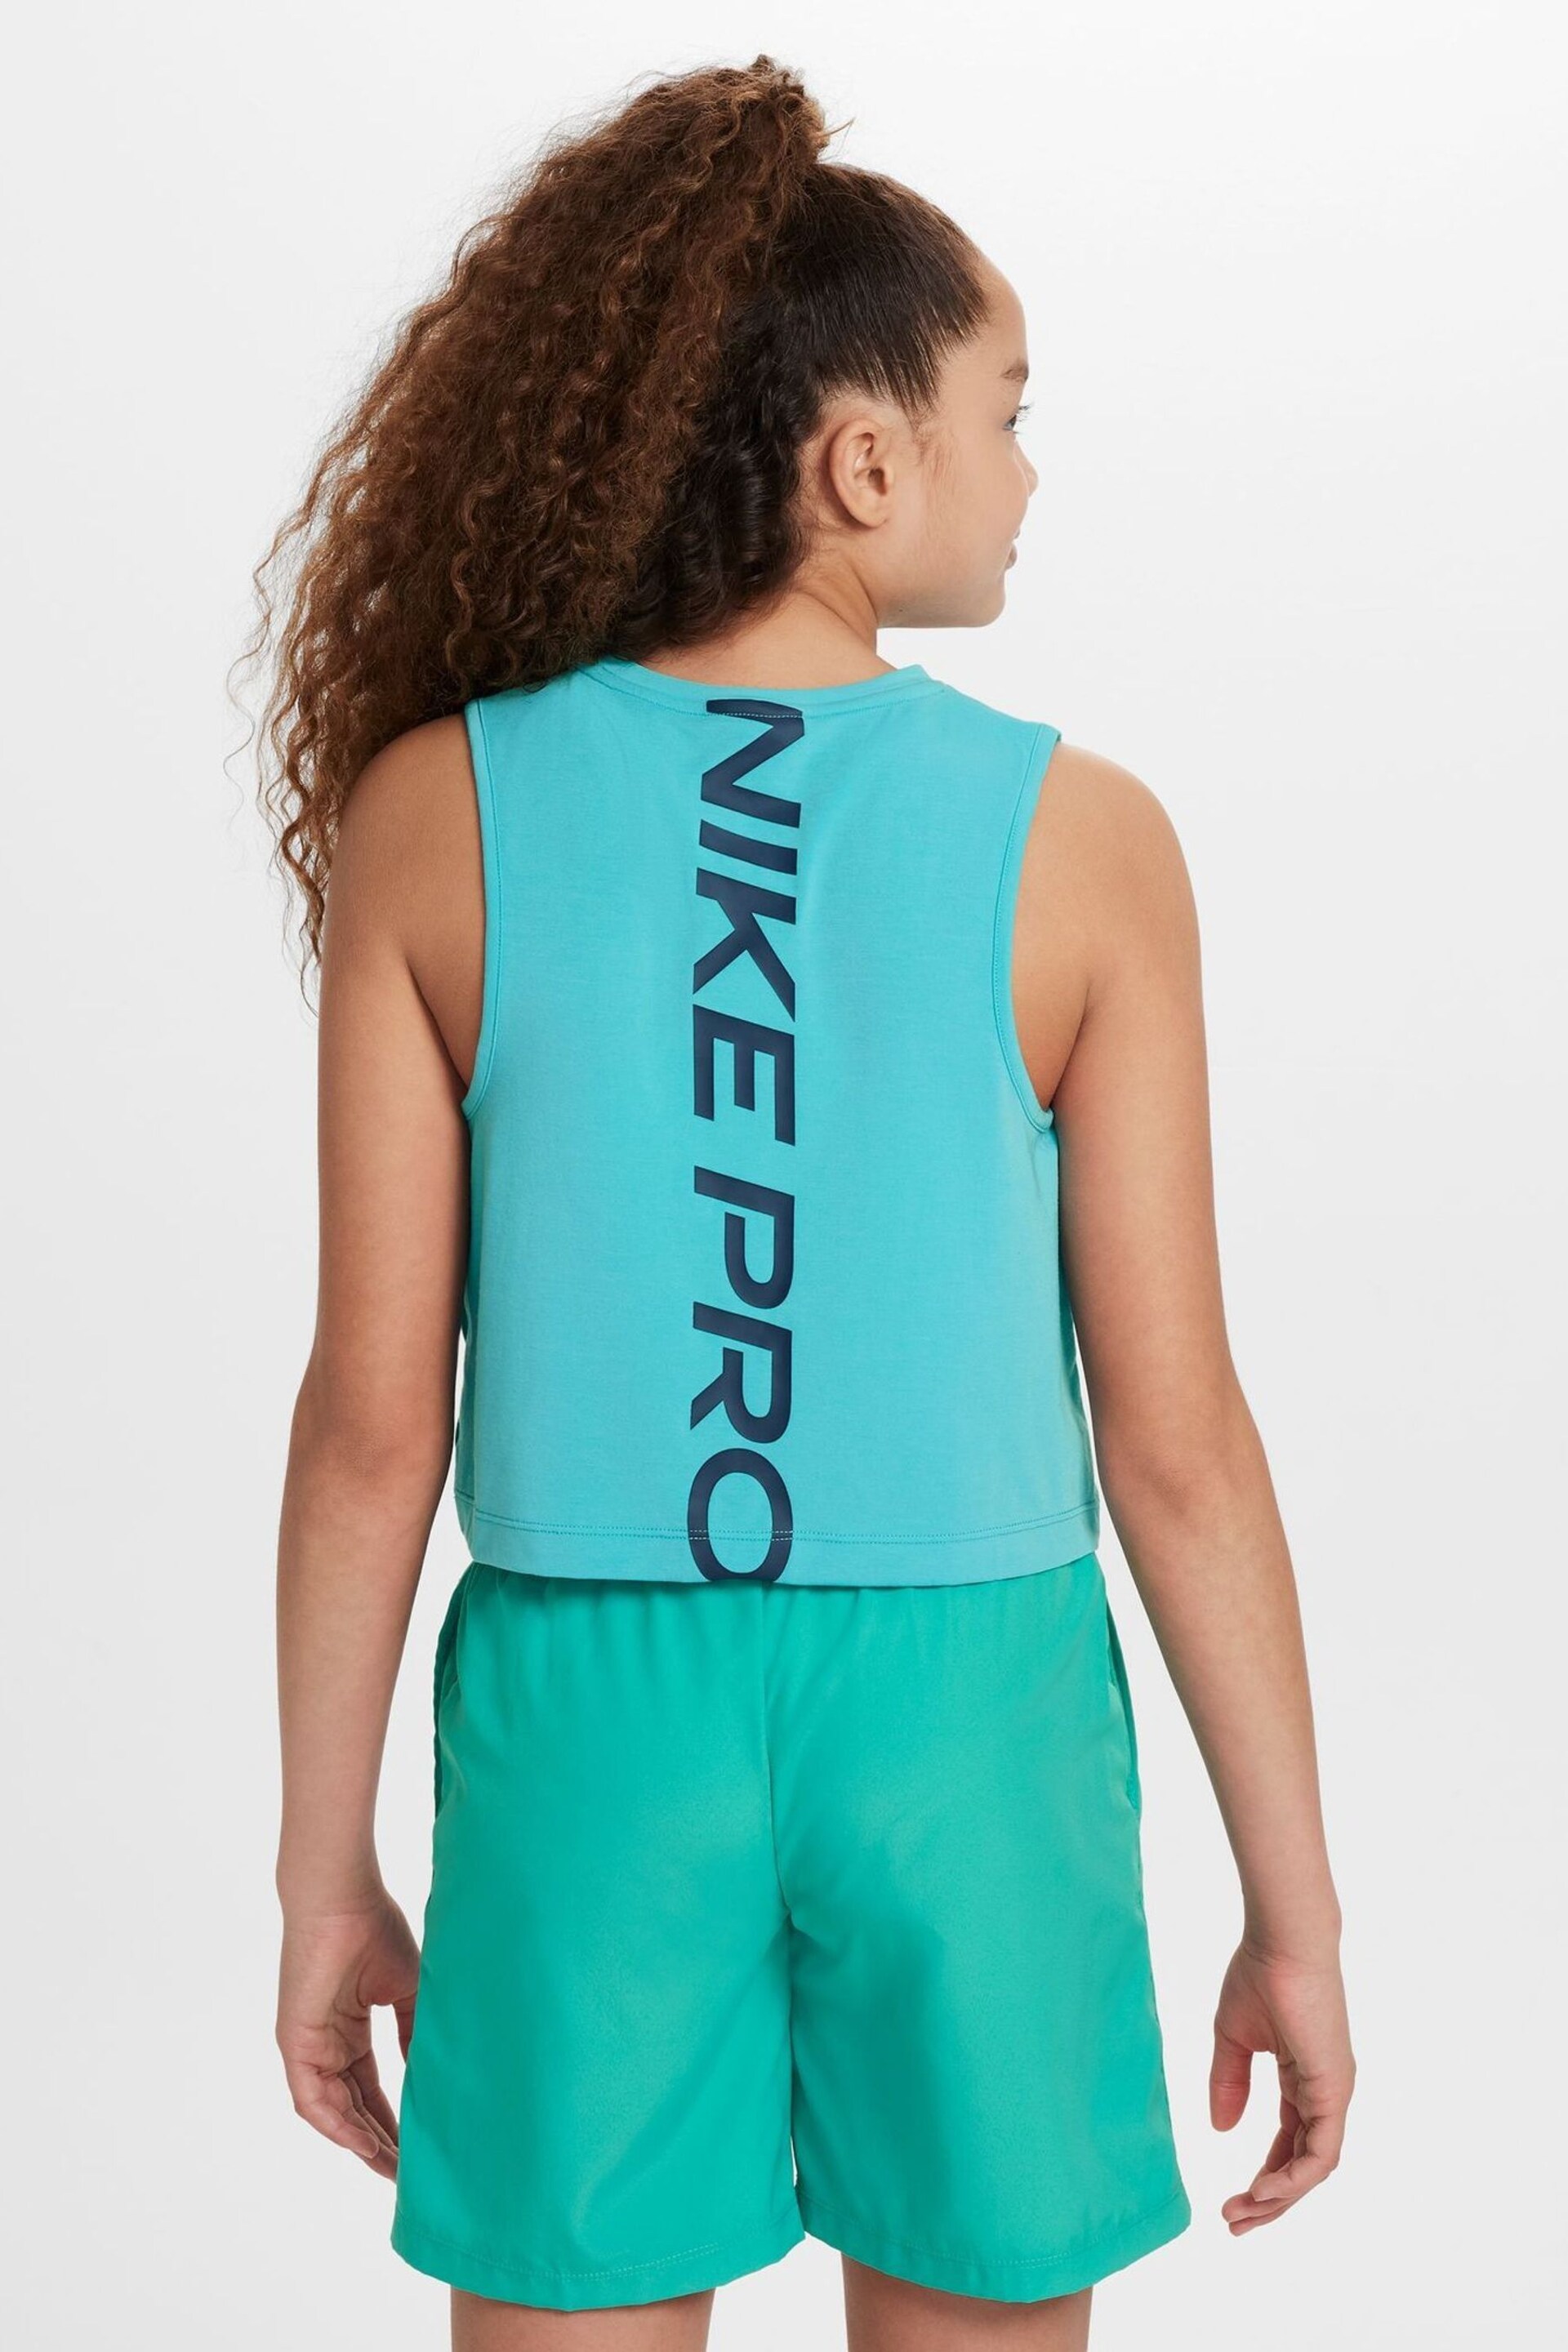 Nike Green Pro Dri-FIT Vest Top - Image 2 of 5